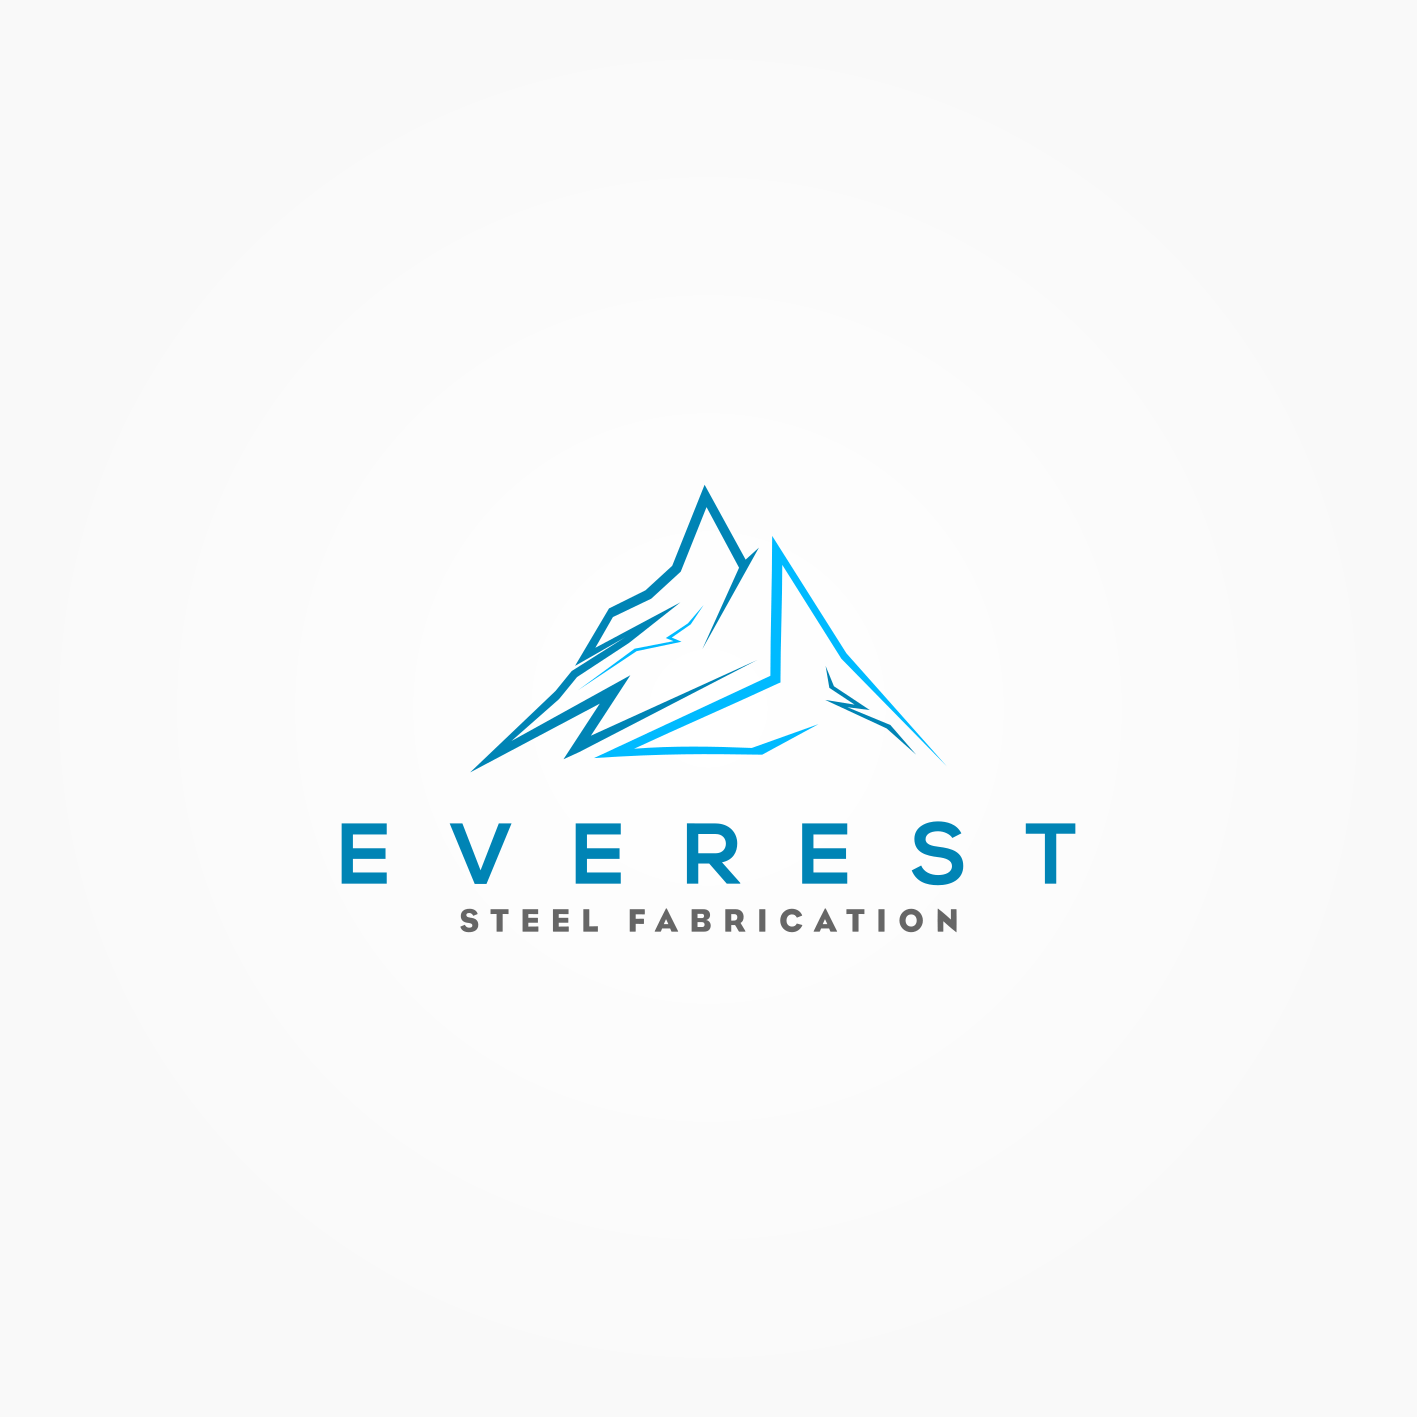 Everest Logo - Conservative, Serious Logo Design for Everest Steel Fabrication